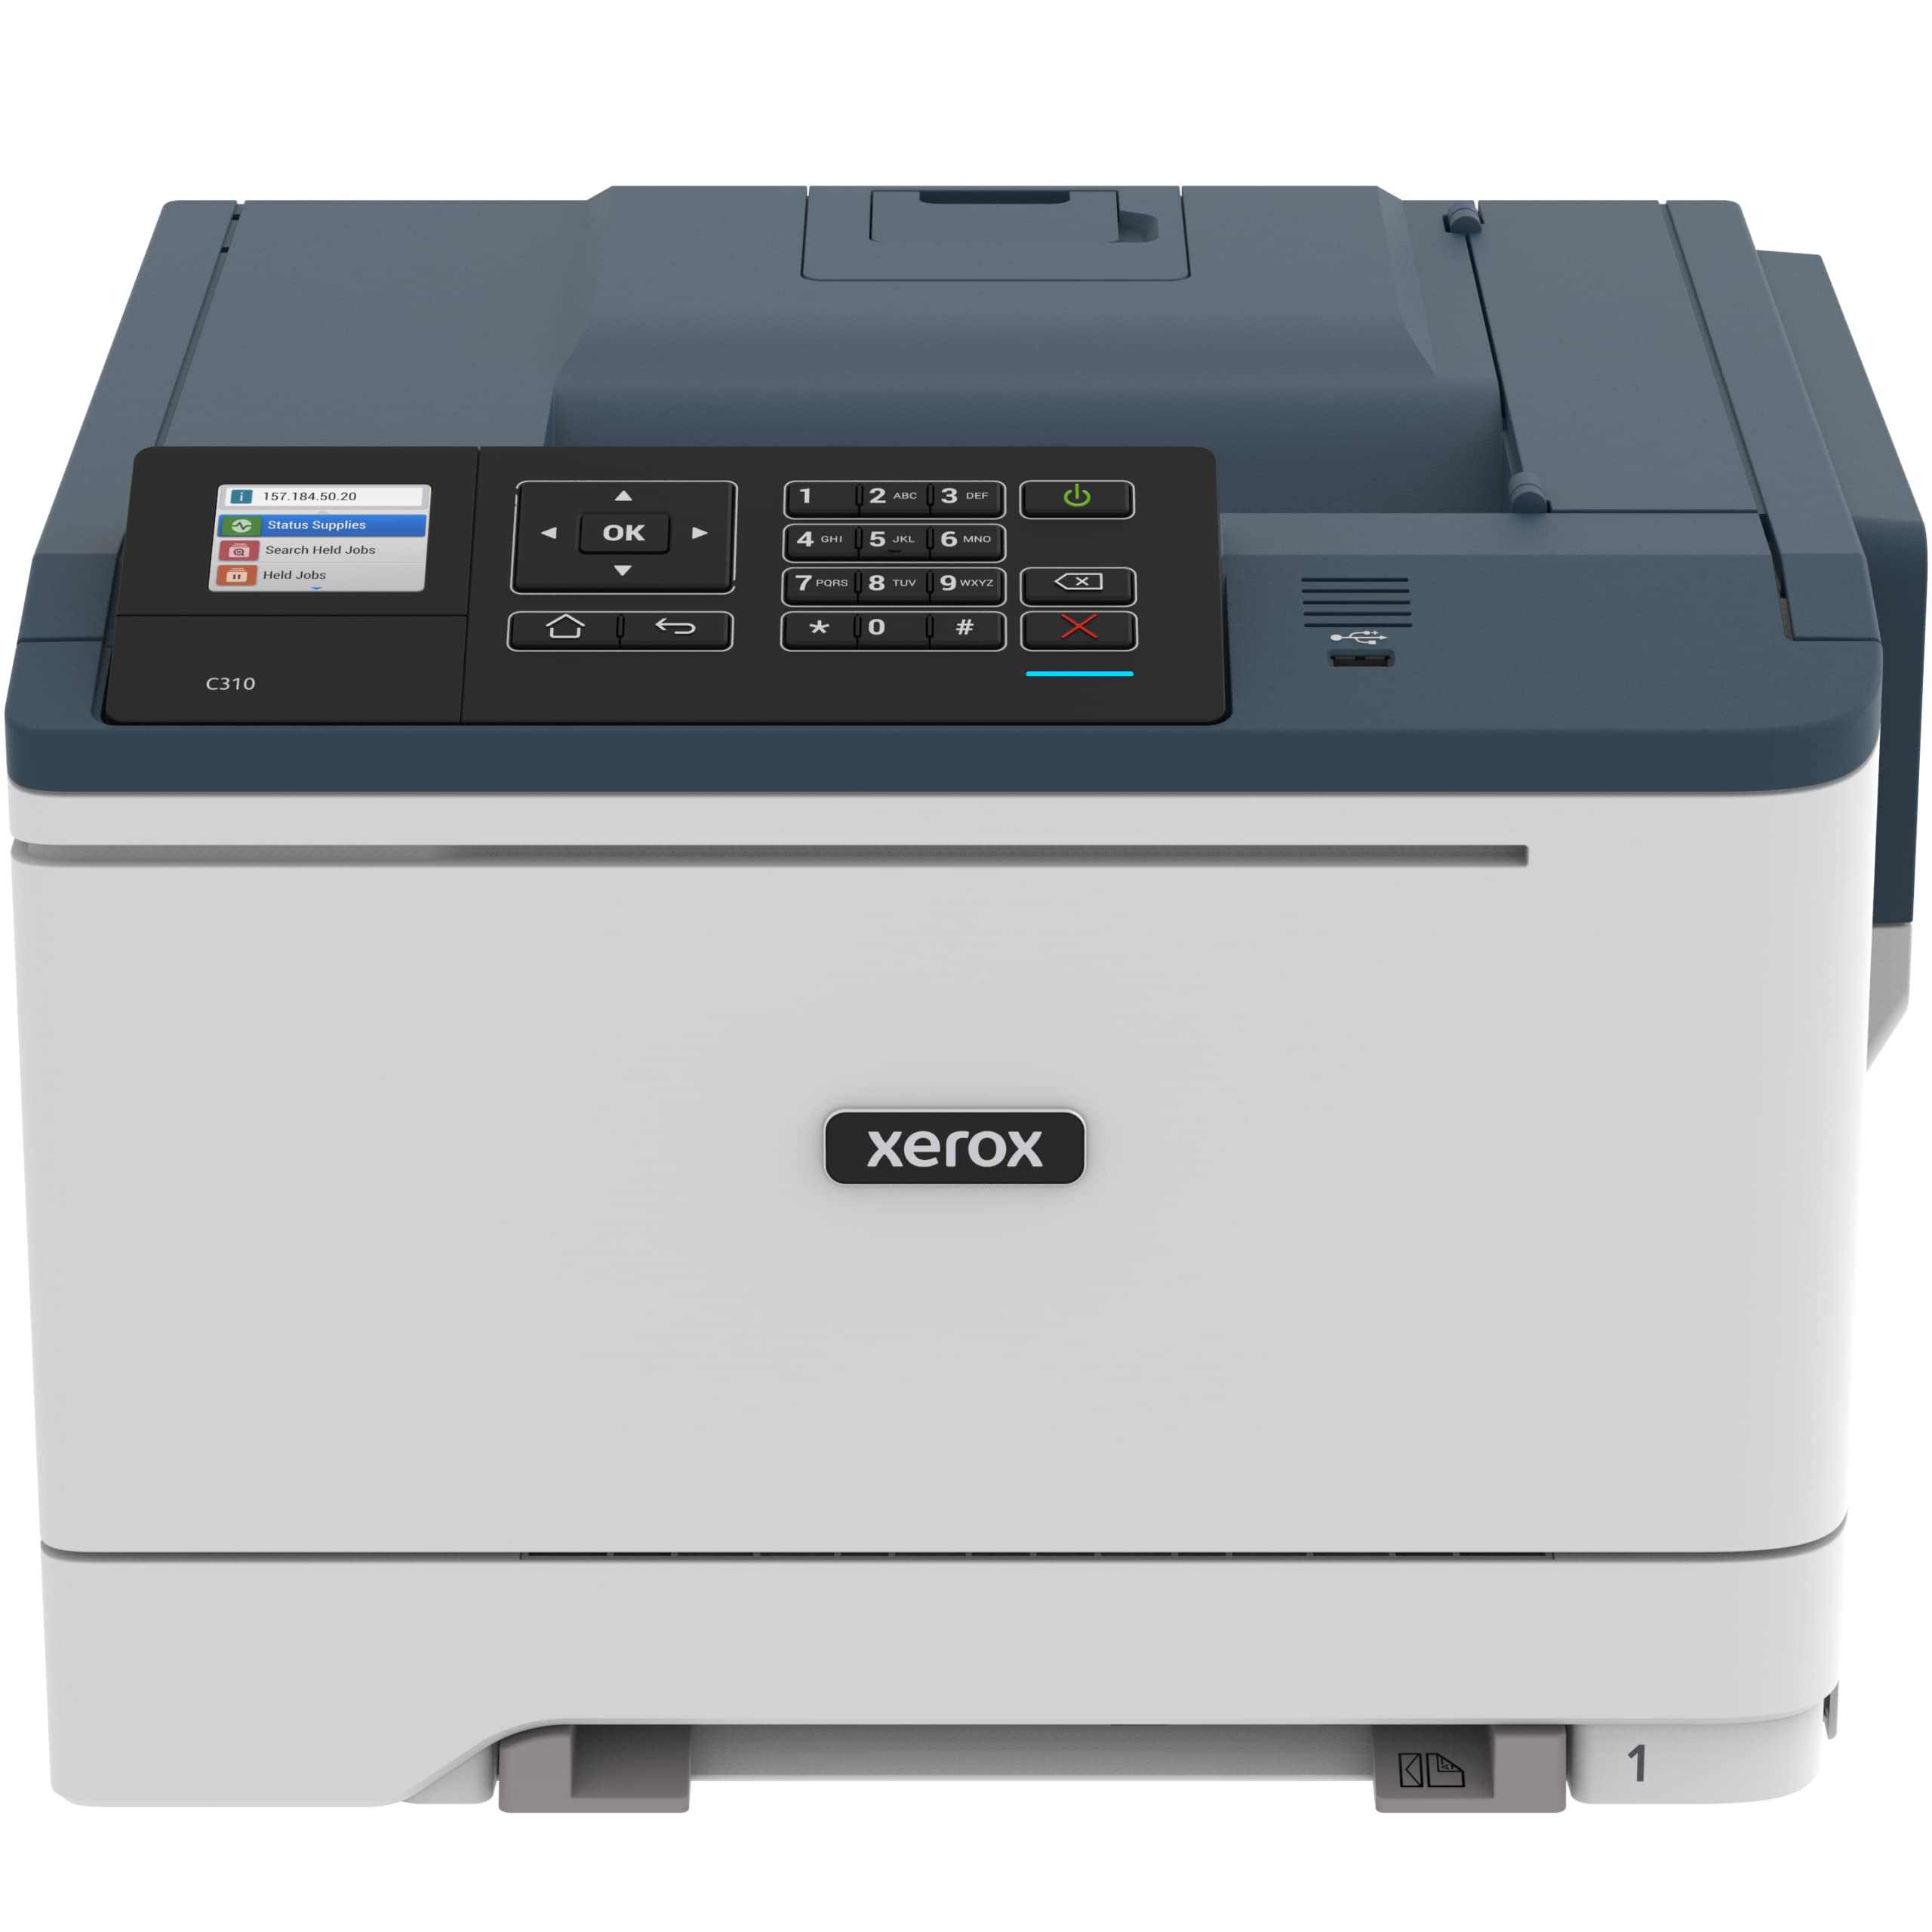 Xerox Impressora laser colorida sem fio C310/DNI